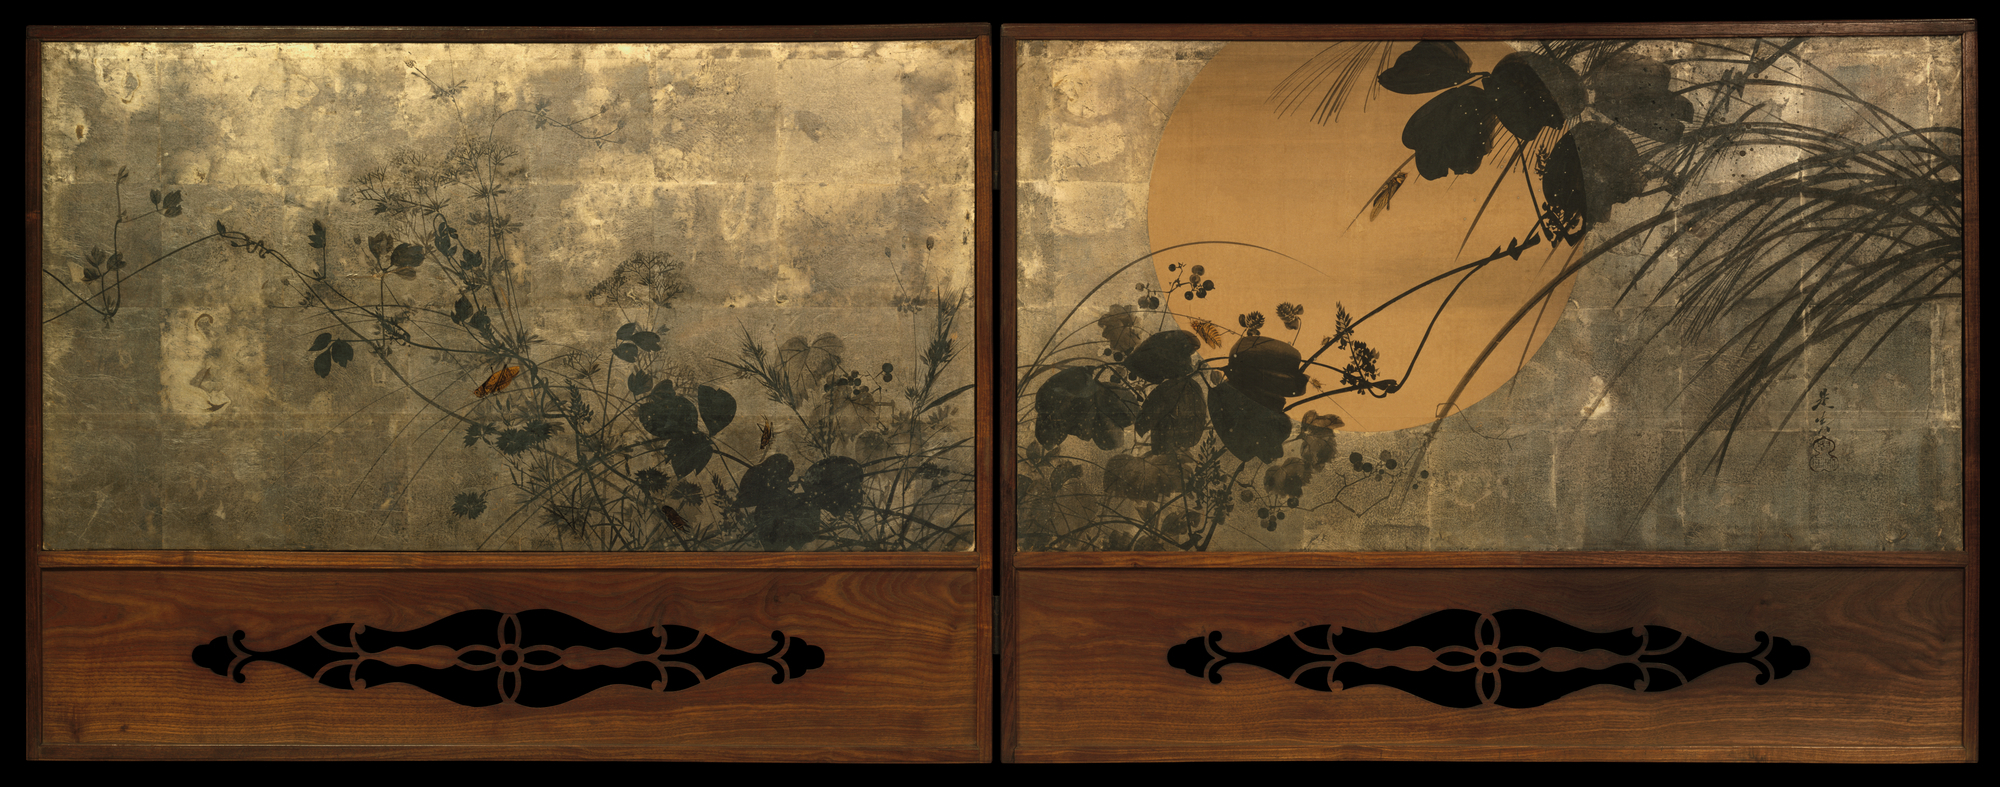 Moon in Japanese woodblock prints: Shibata Zeshin, Autumn Grasses in Moonlight, 1872. Wikiart.